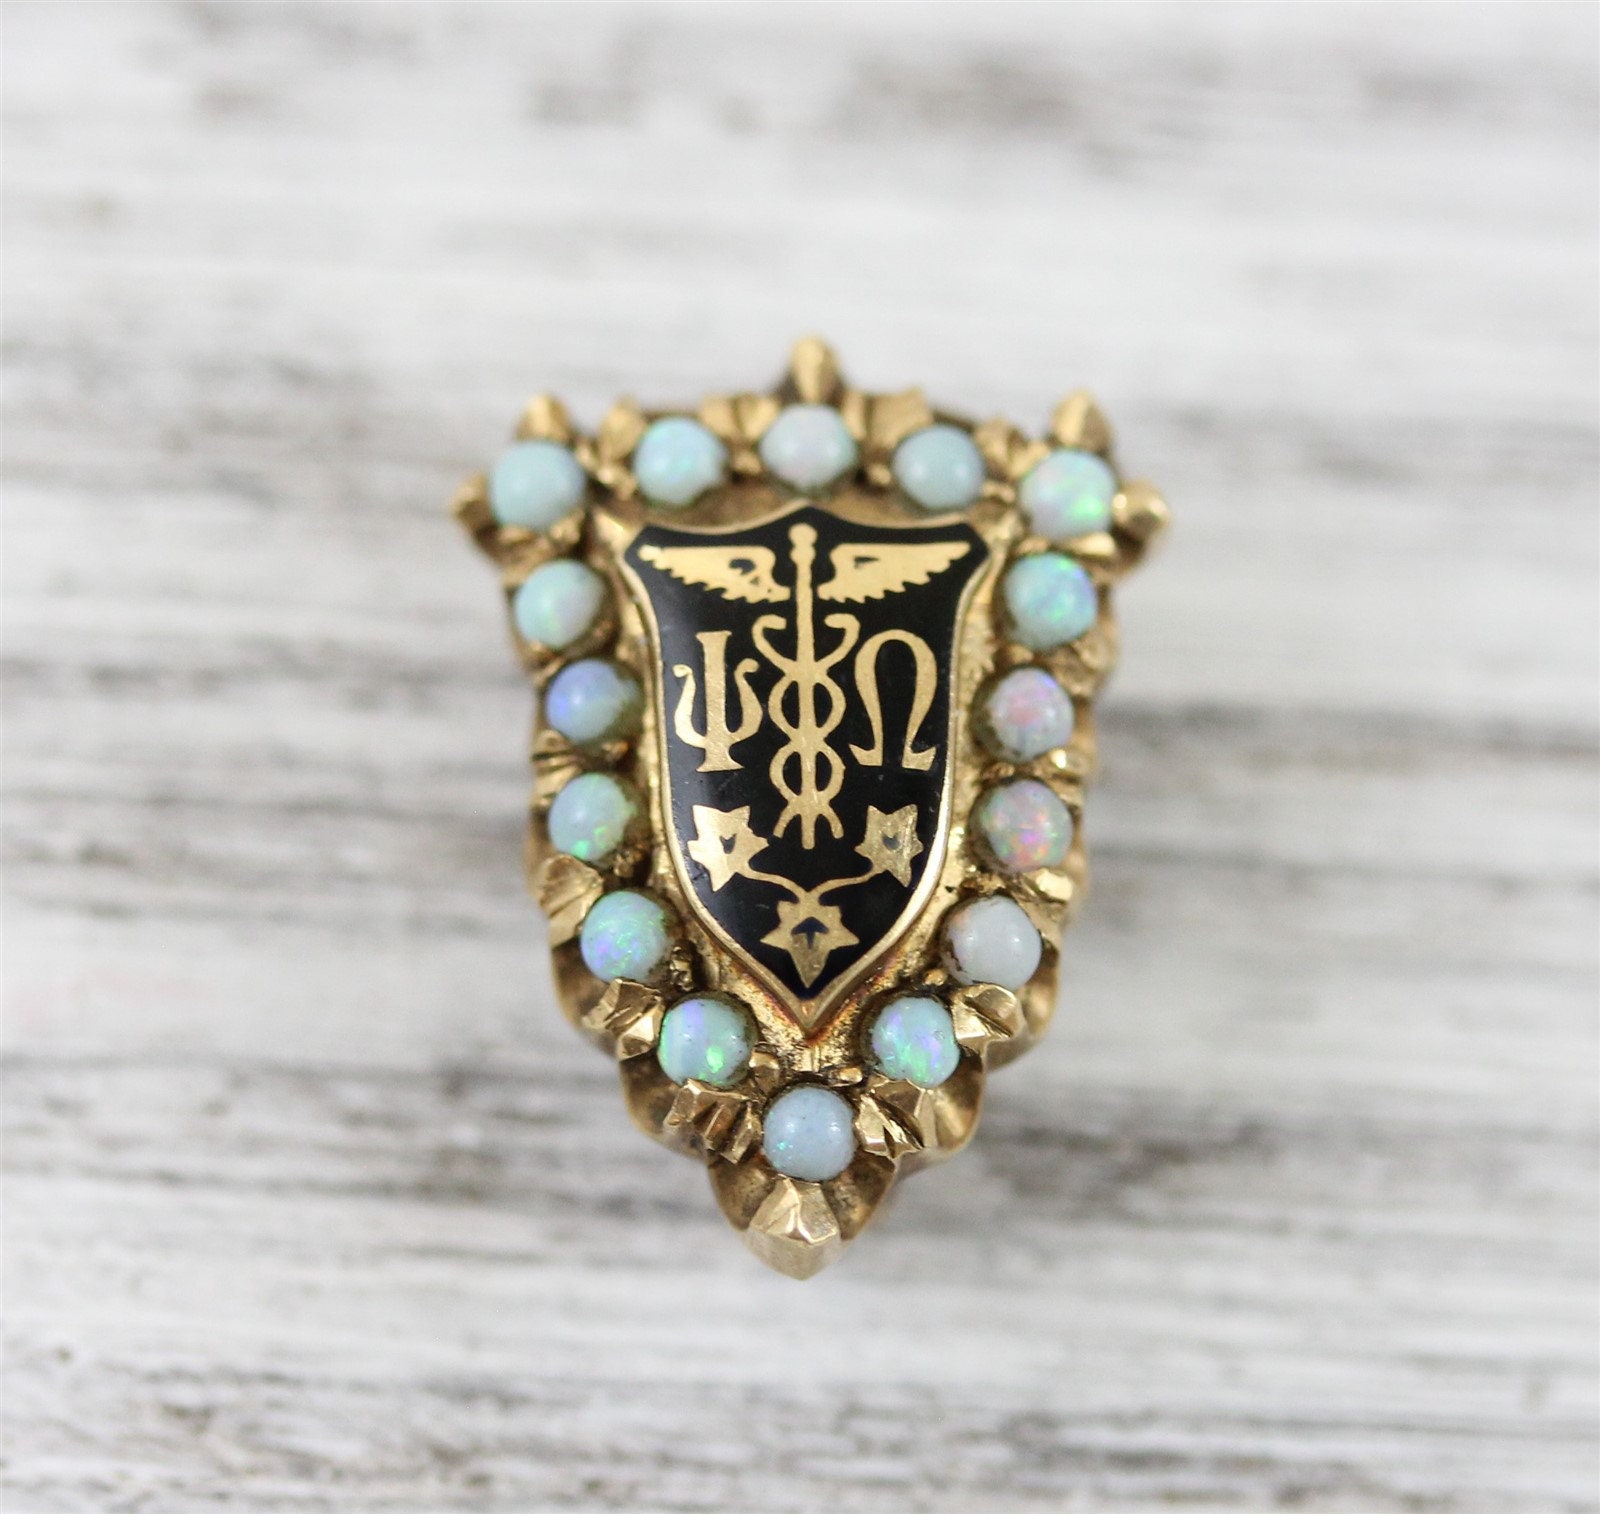 Alpha & Omega Jewelry Victorian 18K Gold, Rose Cut Diamond, Enamel Snake Ribbon Brooch, Antique Pin